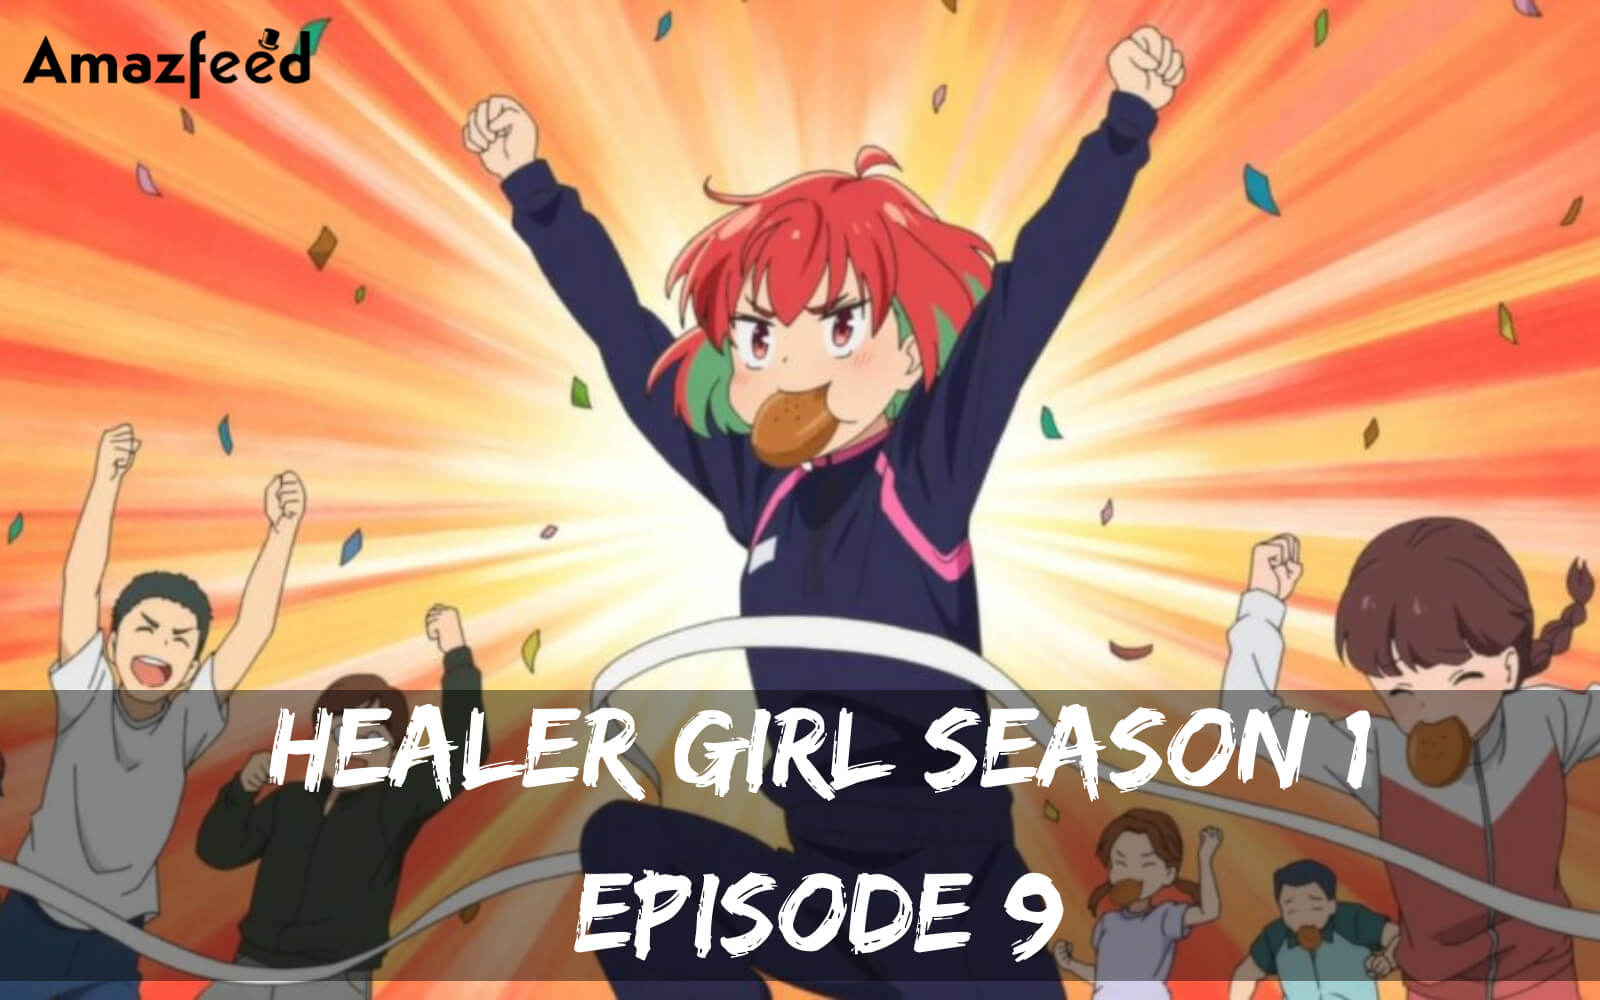 Healer Girl season 1 Episode 9 release date